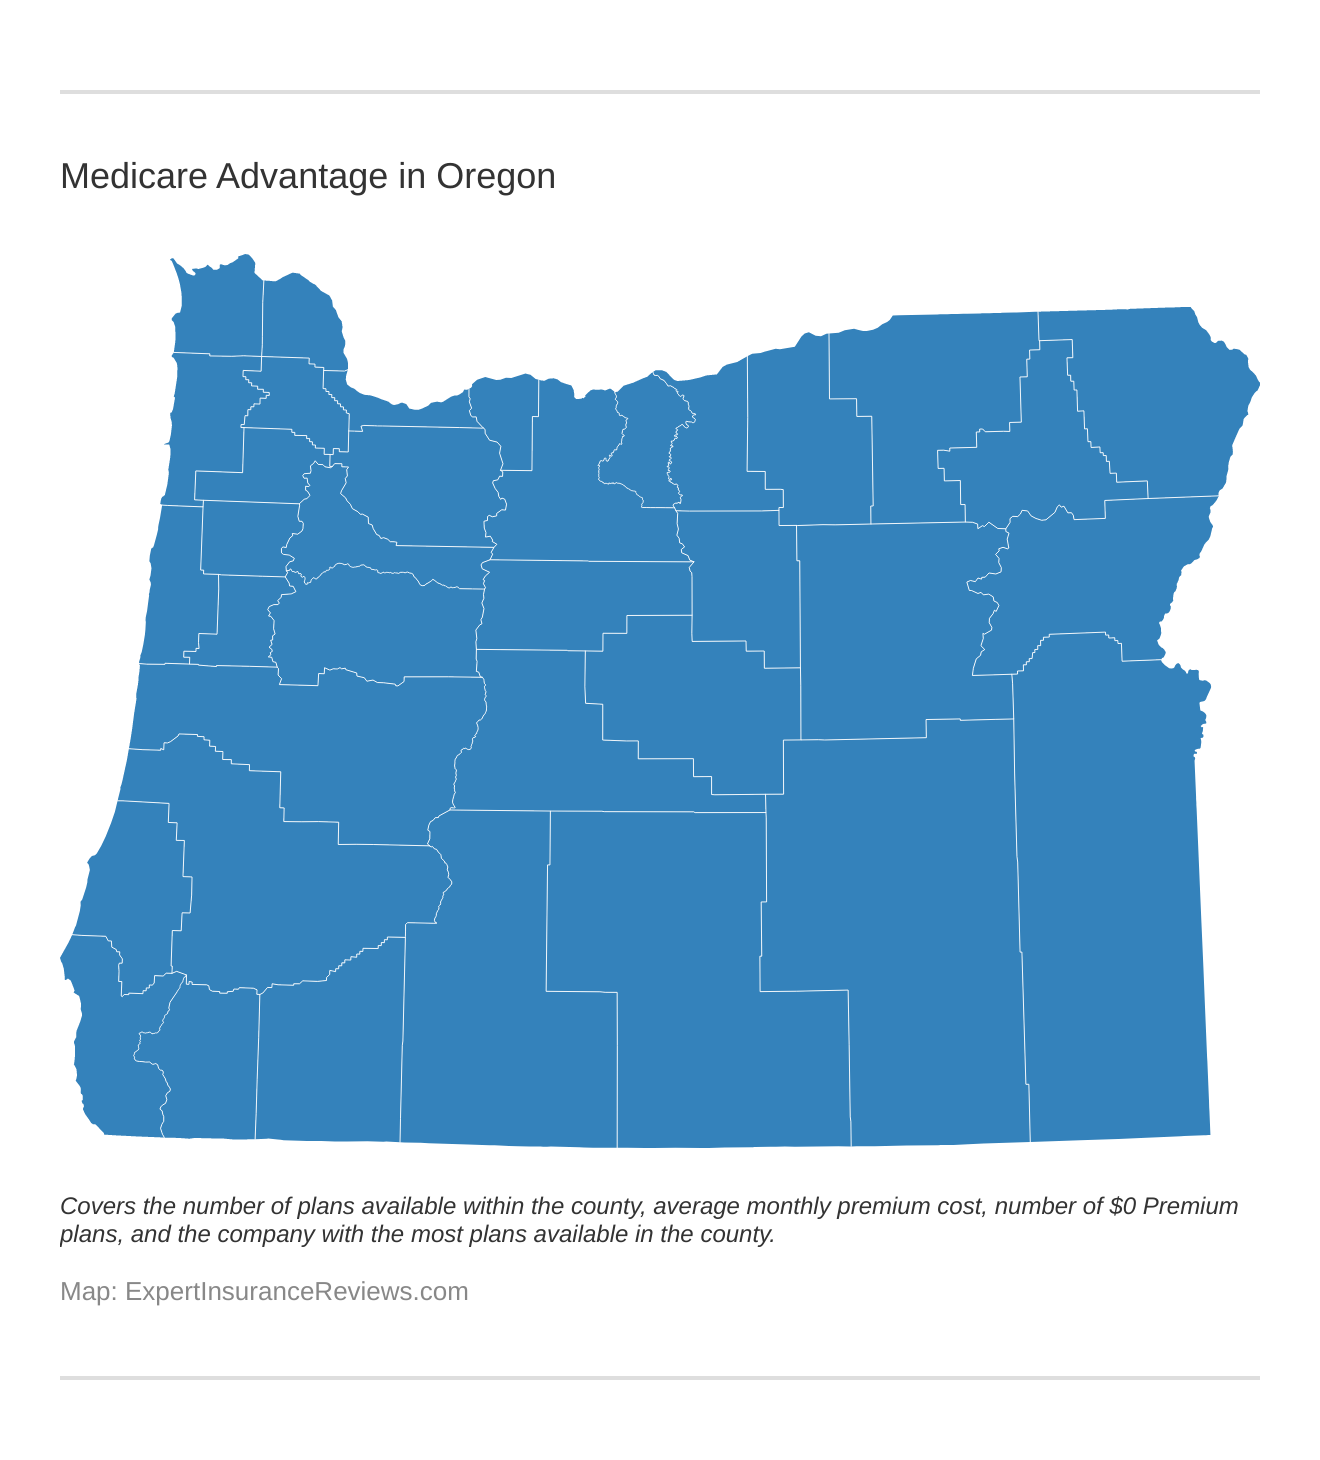 Medicare Advantage in Oregon